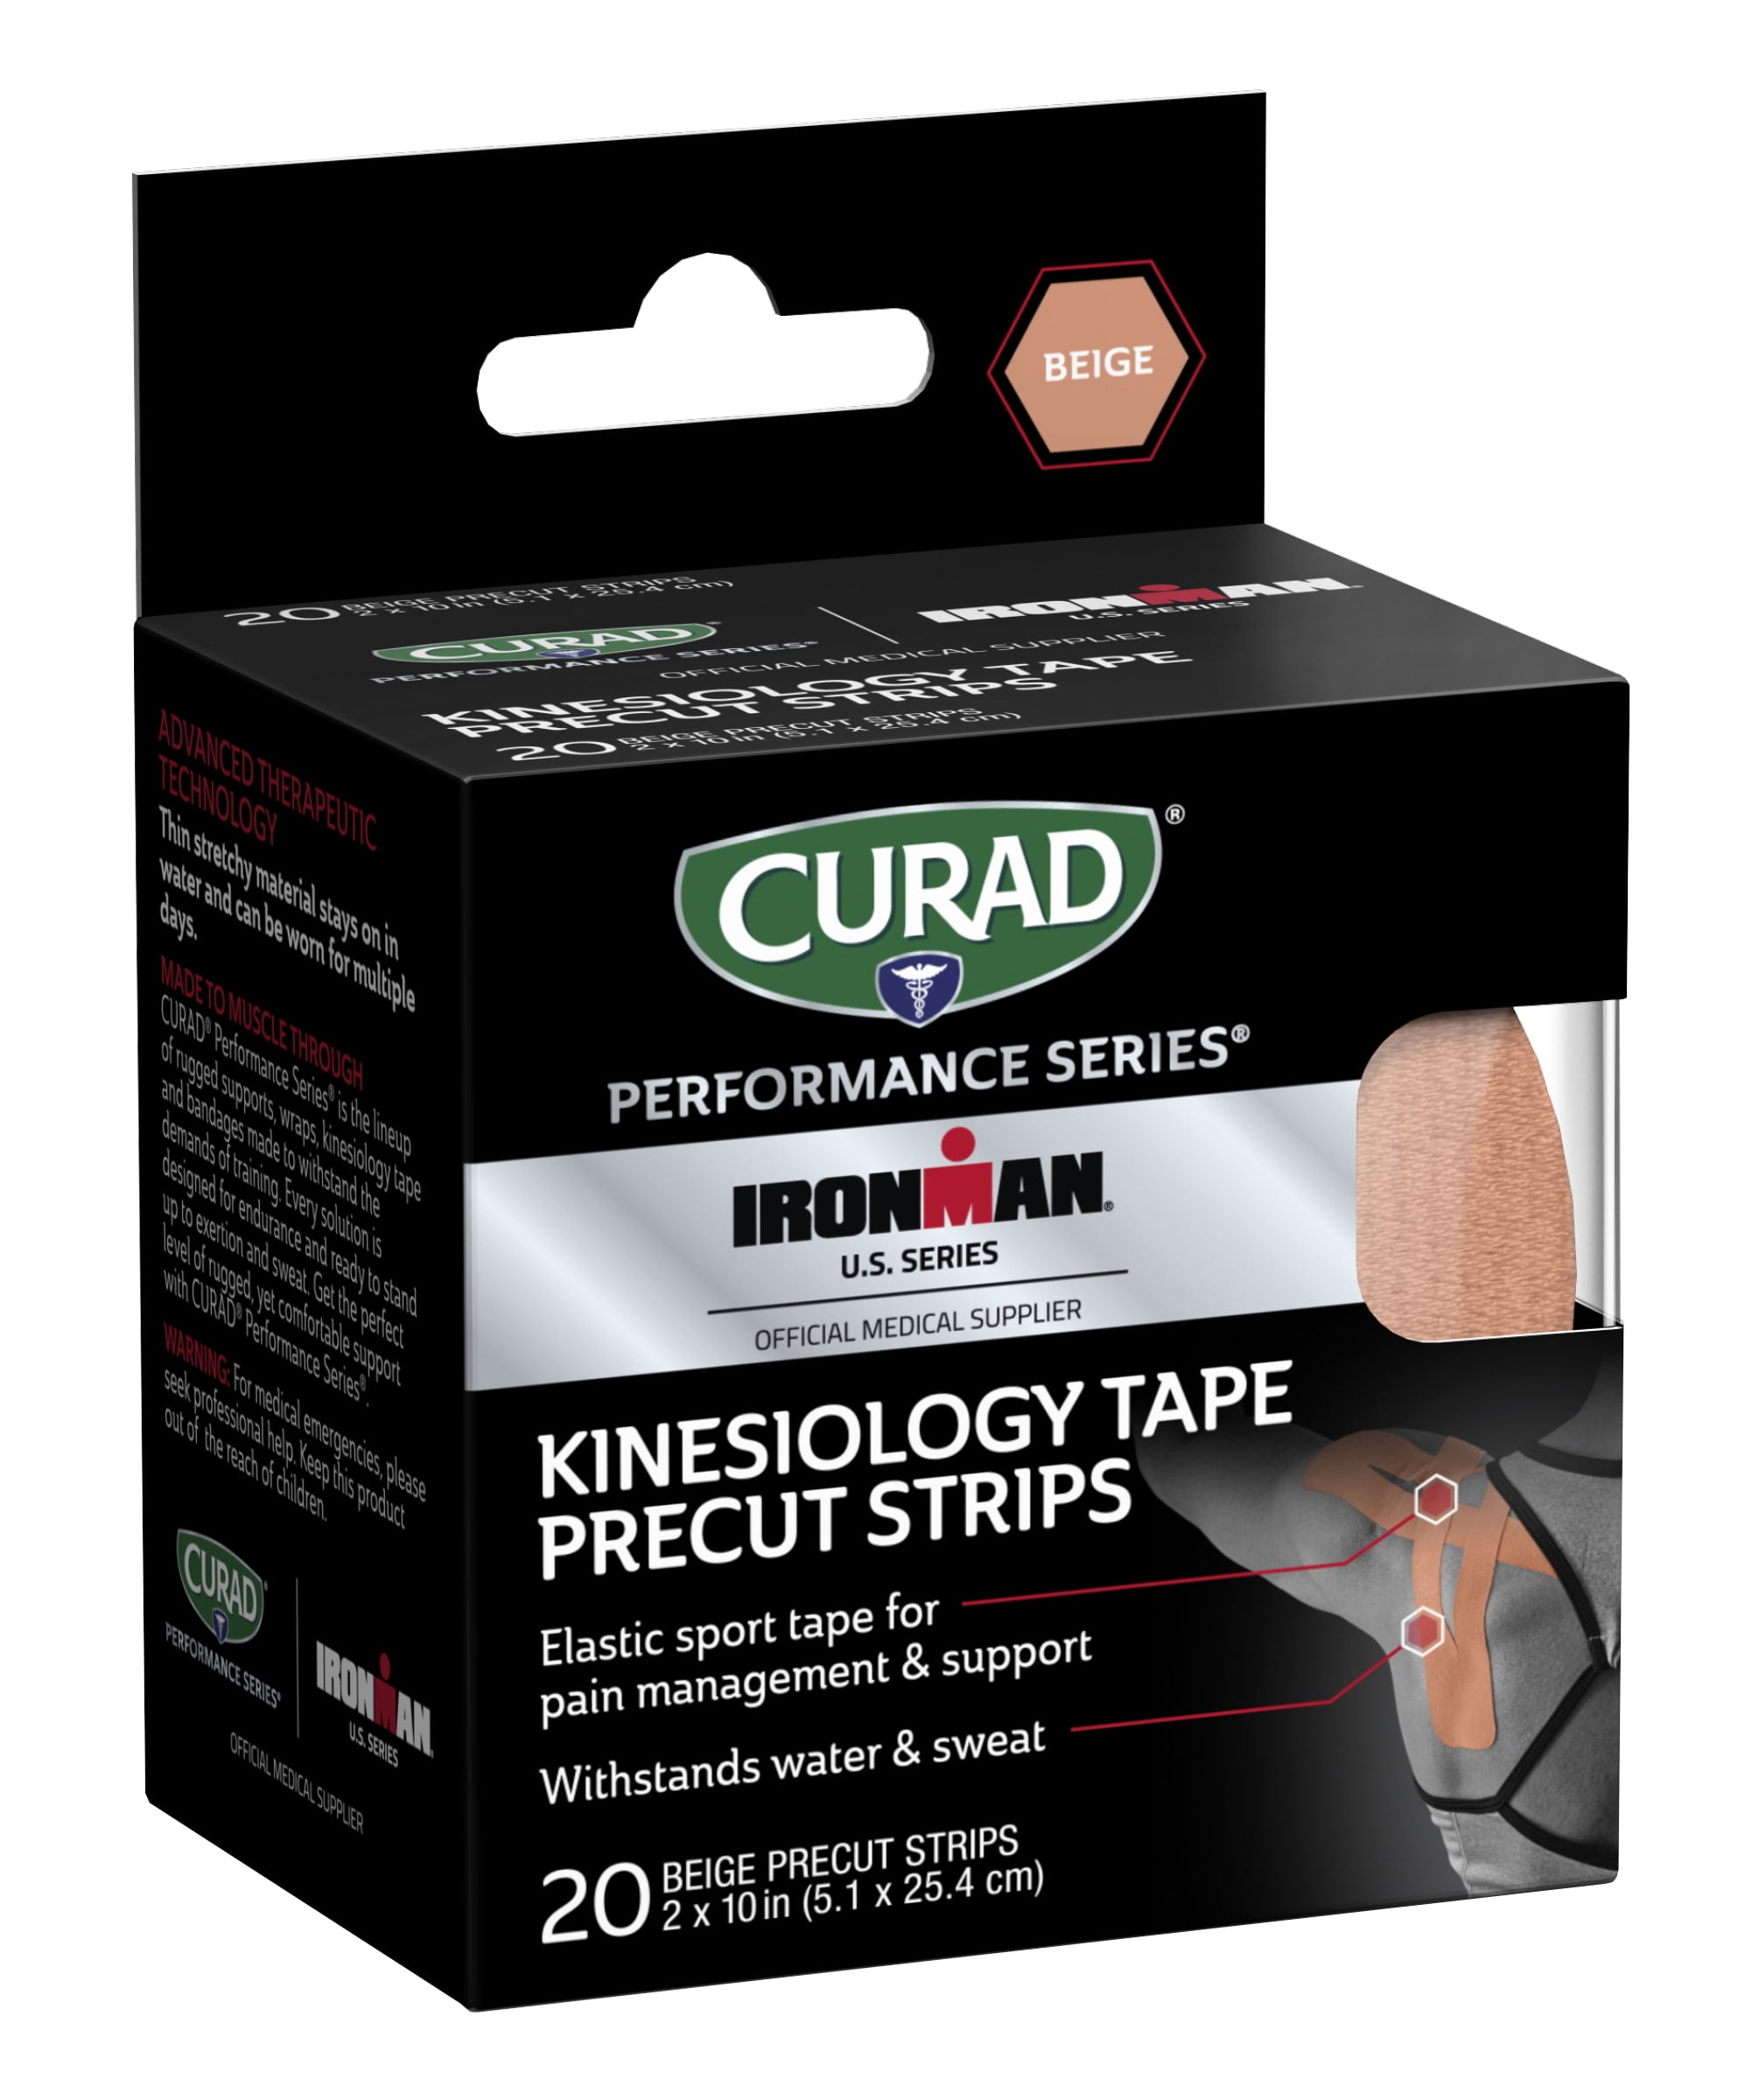 Curad Ironman Performance Series Kinesiology Tape, 2" x 10", 20 Precut Self-Adhesive Strips